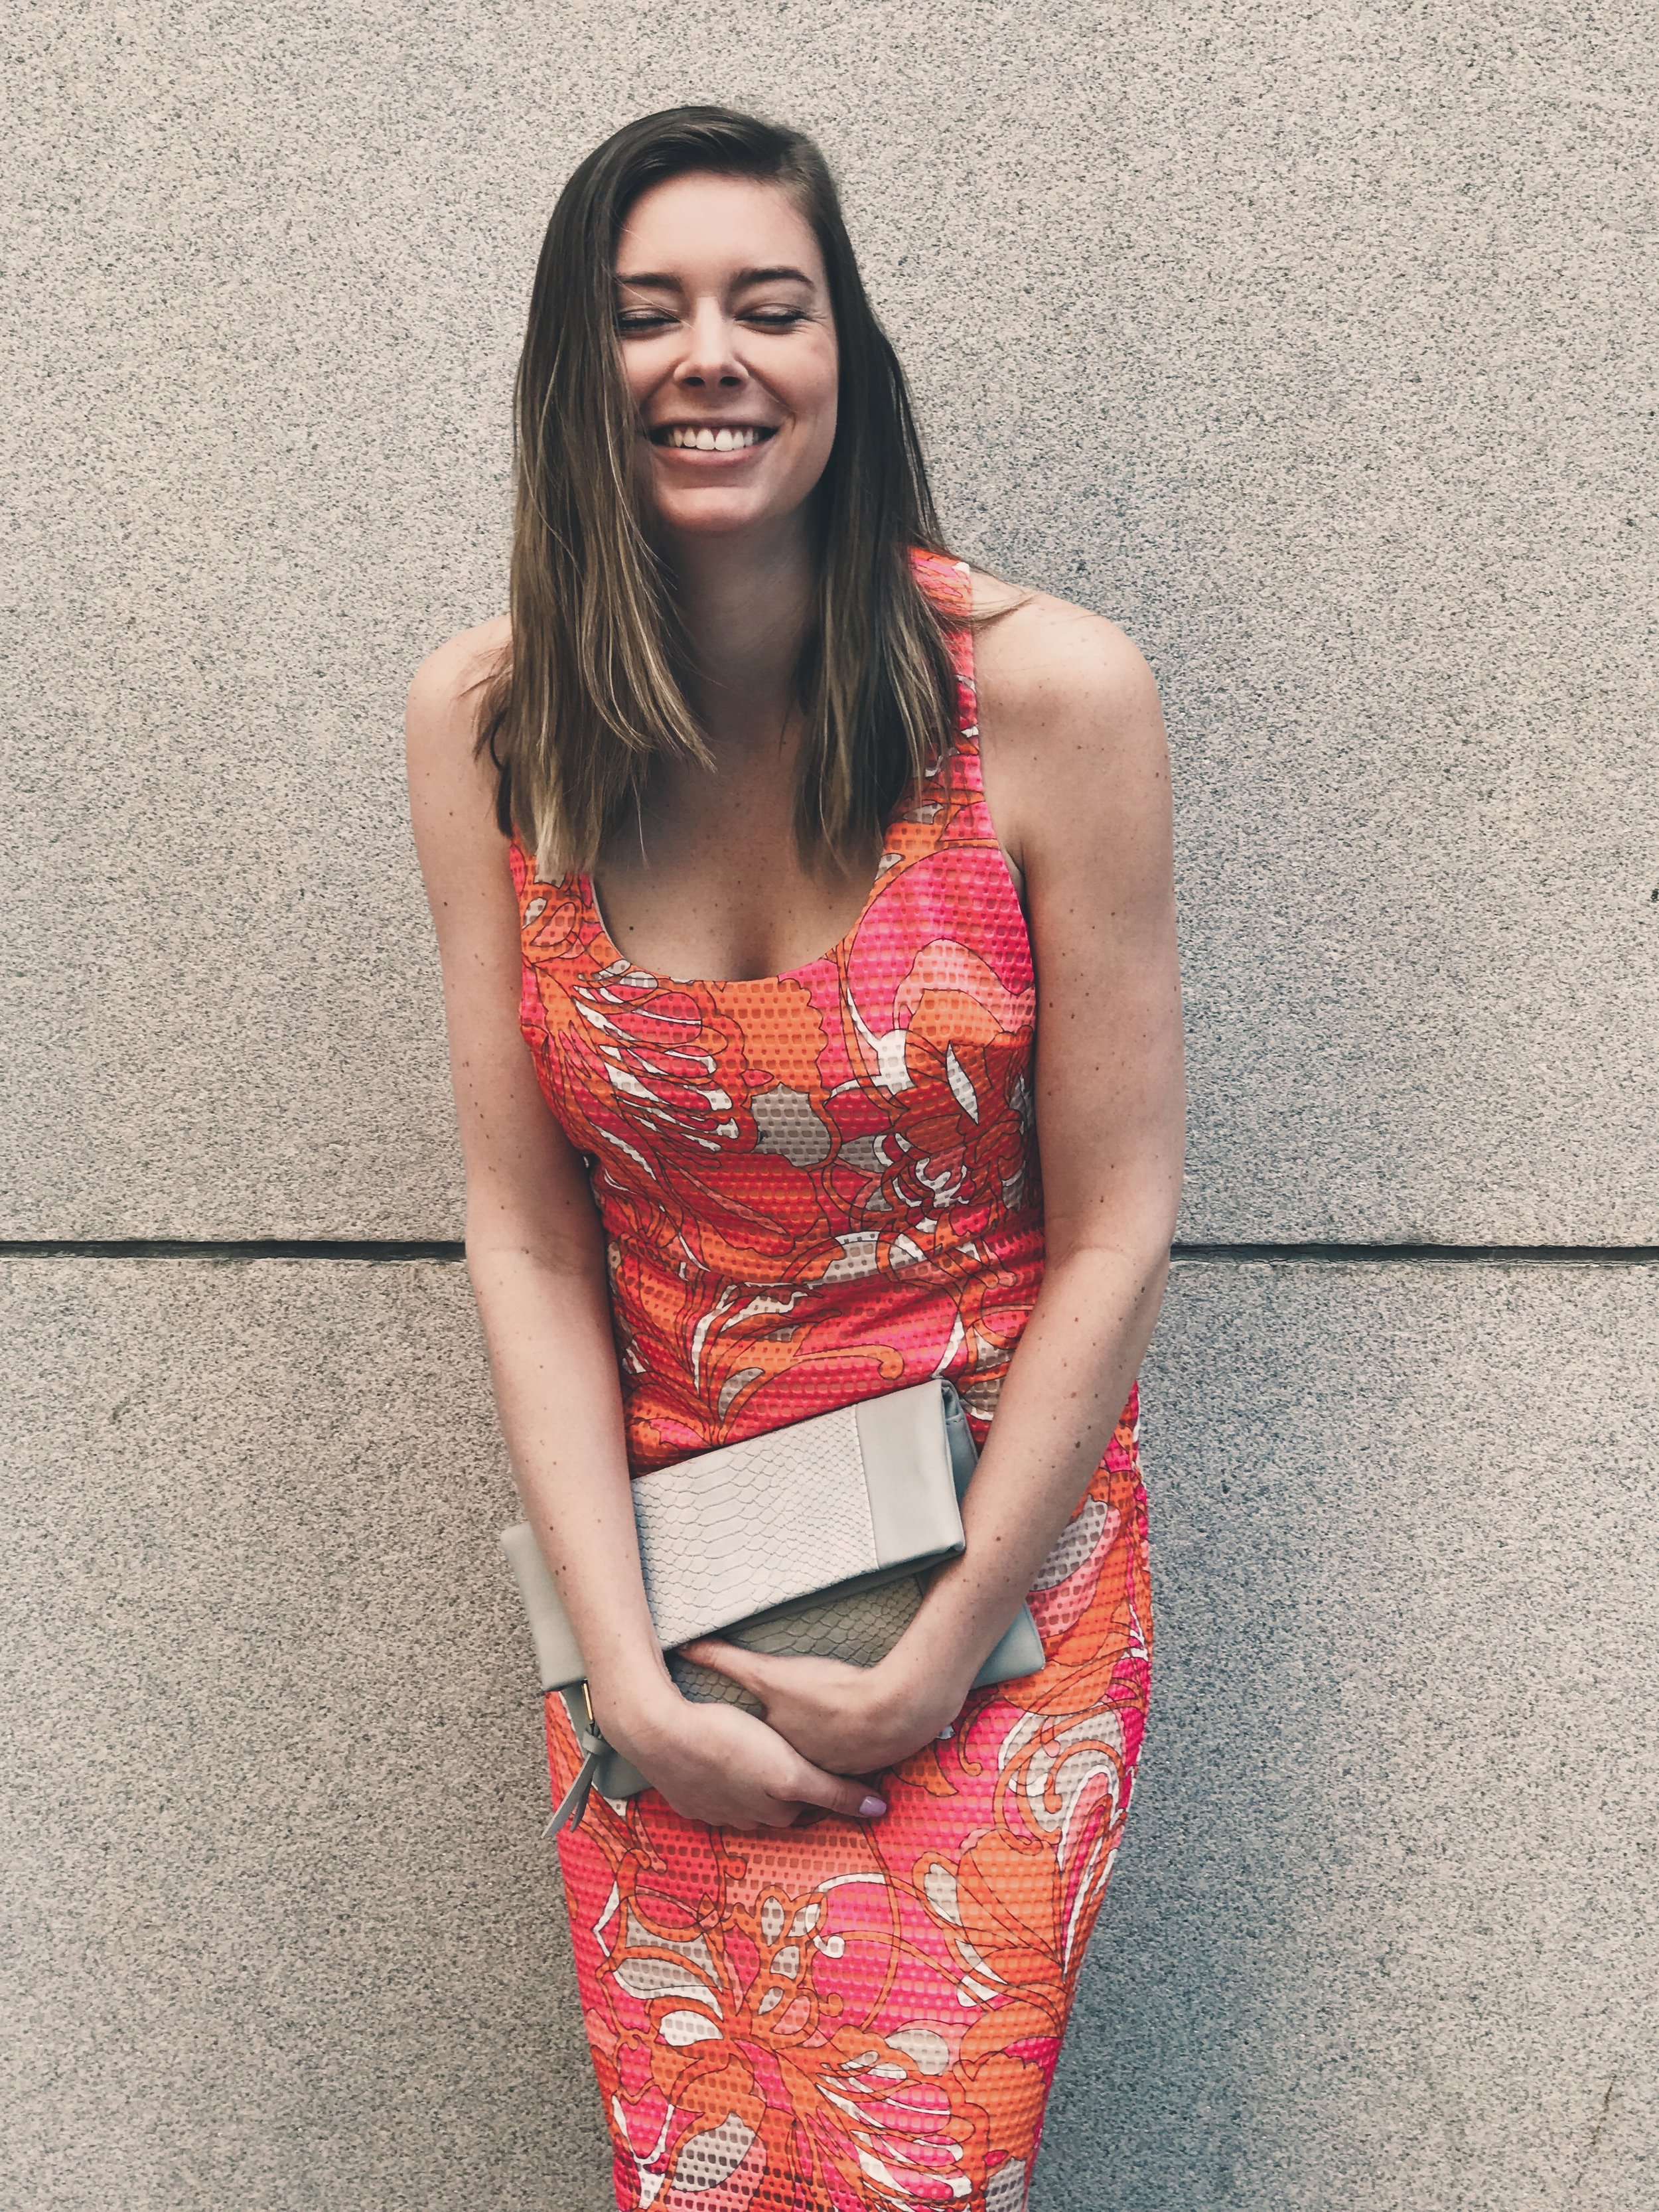 On Amanda: Dress: Trina Turk, Clutch: Urban Expressions